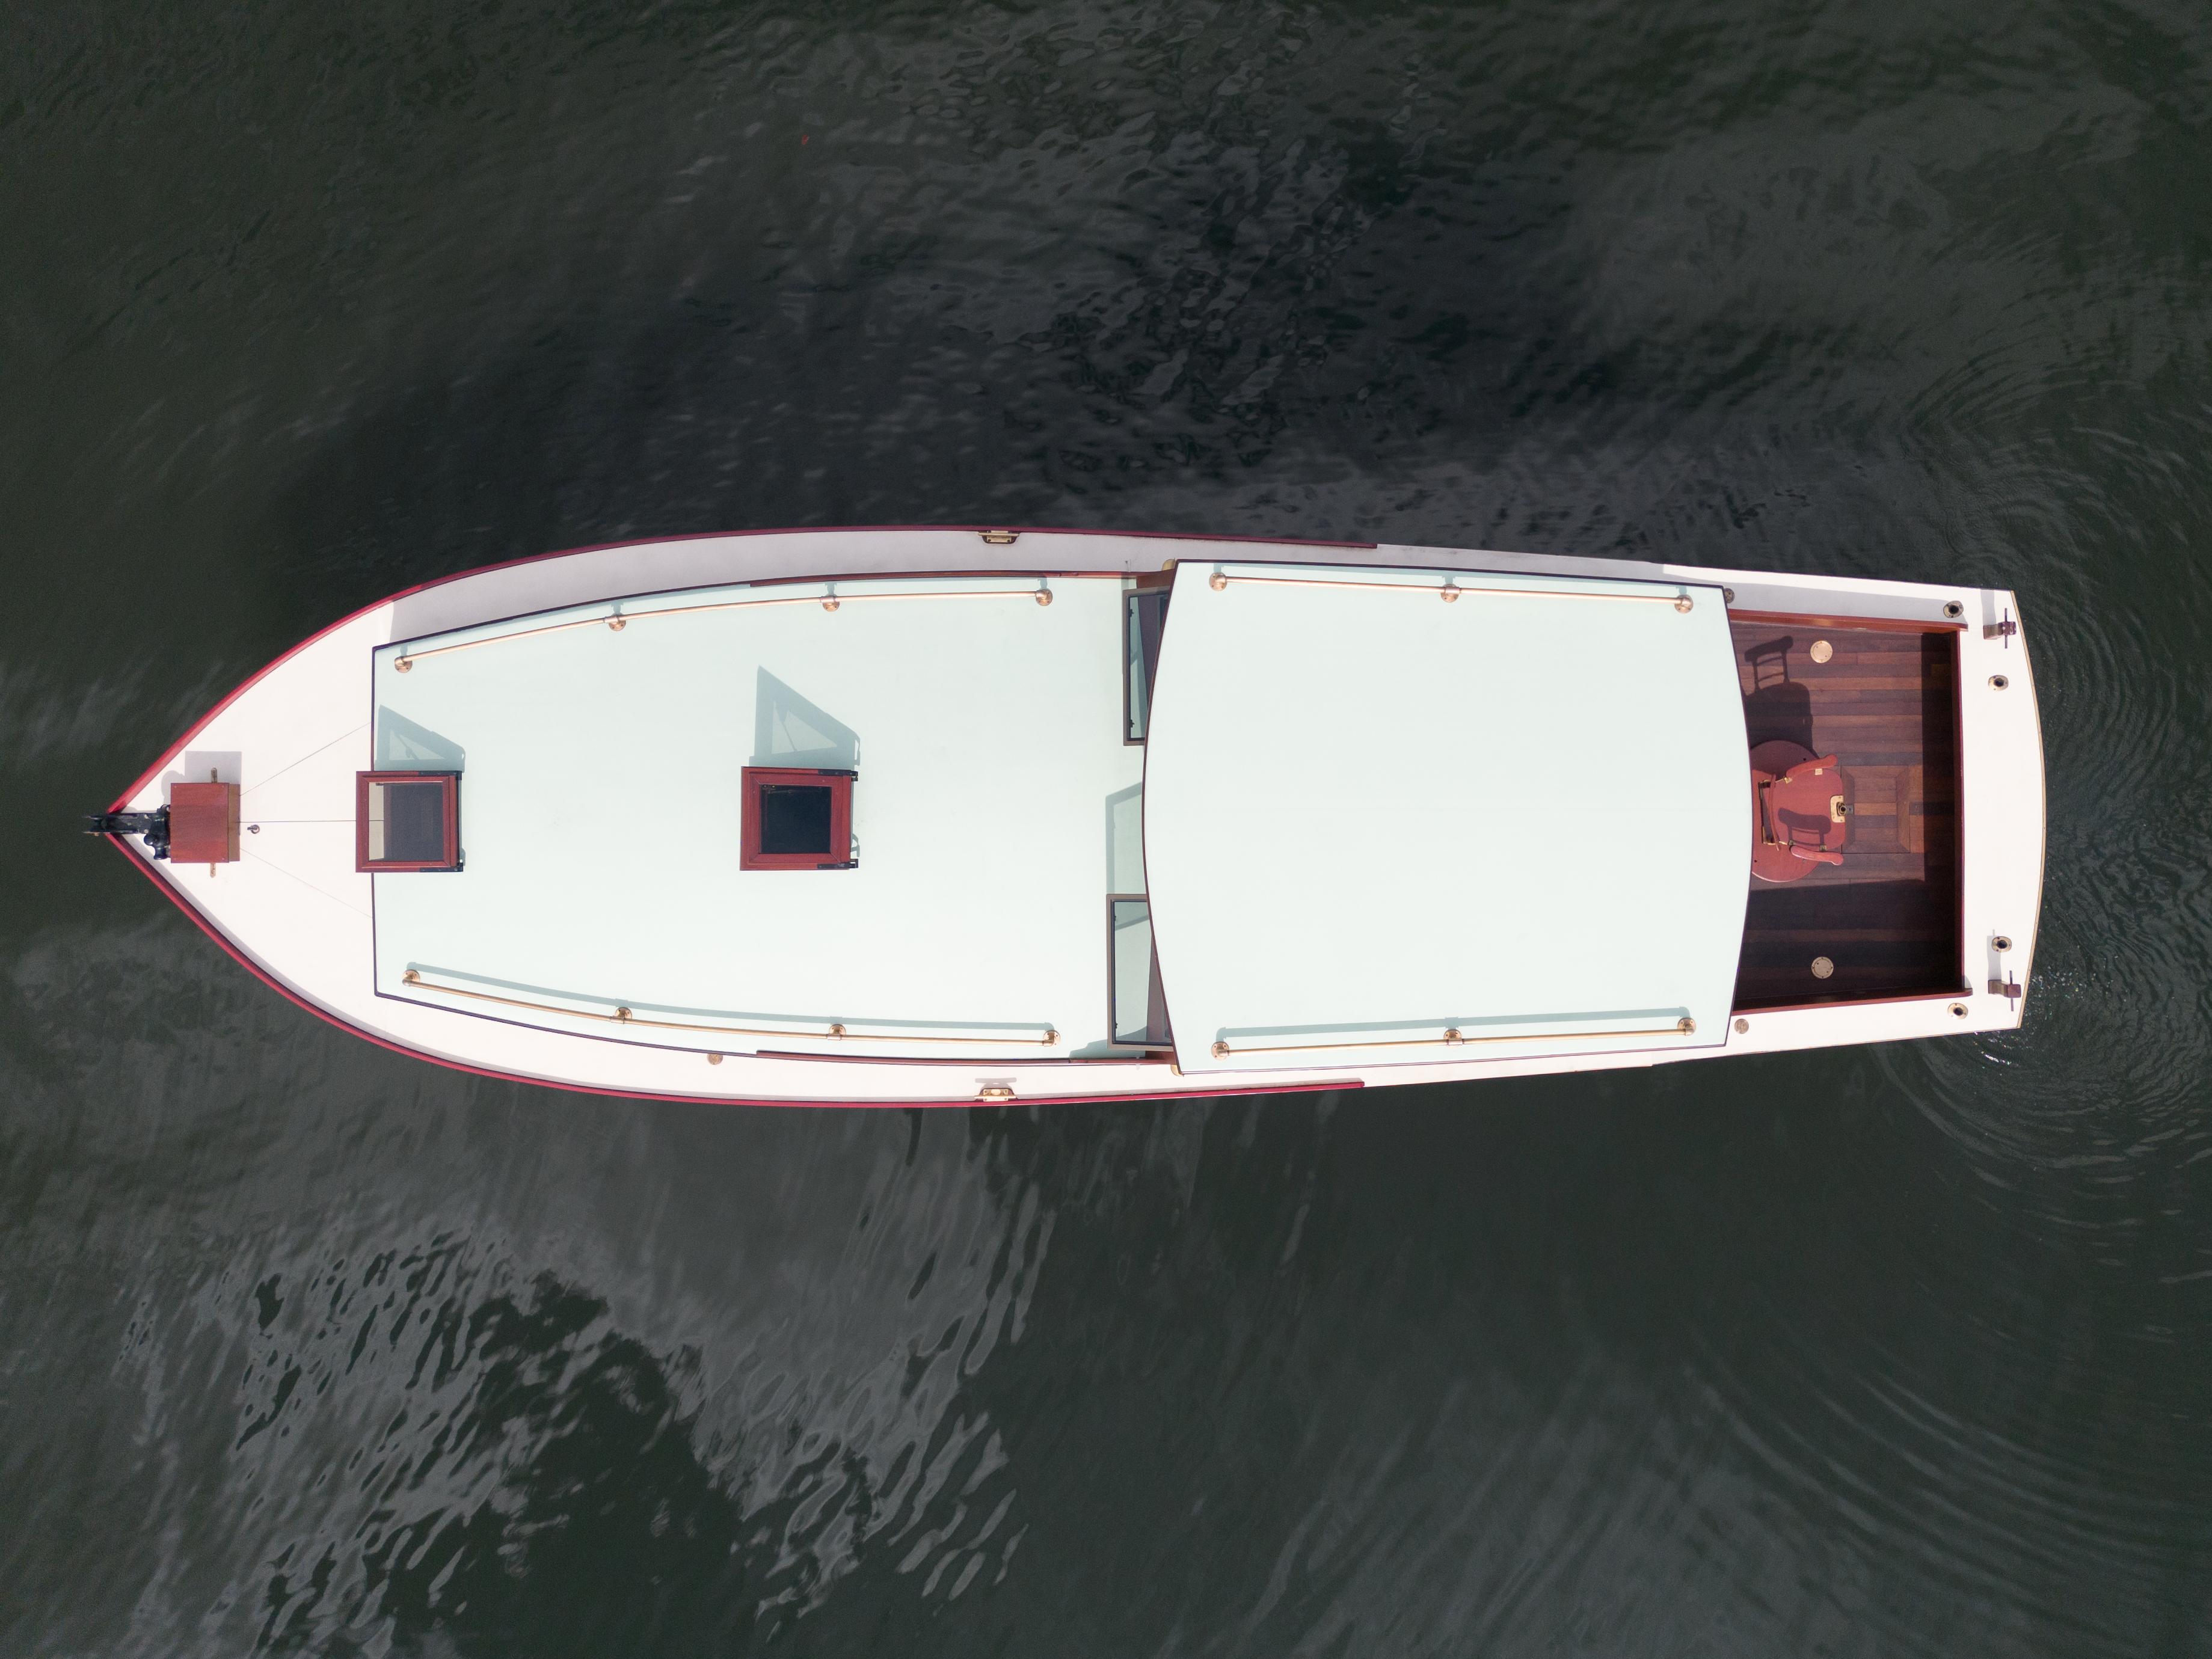 Wheeler 37 AMIGO - Birdseye View On Water